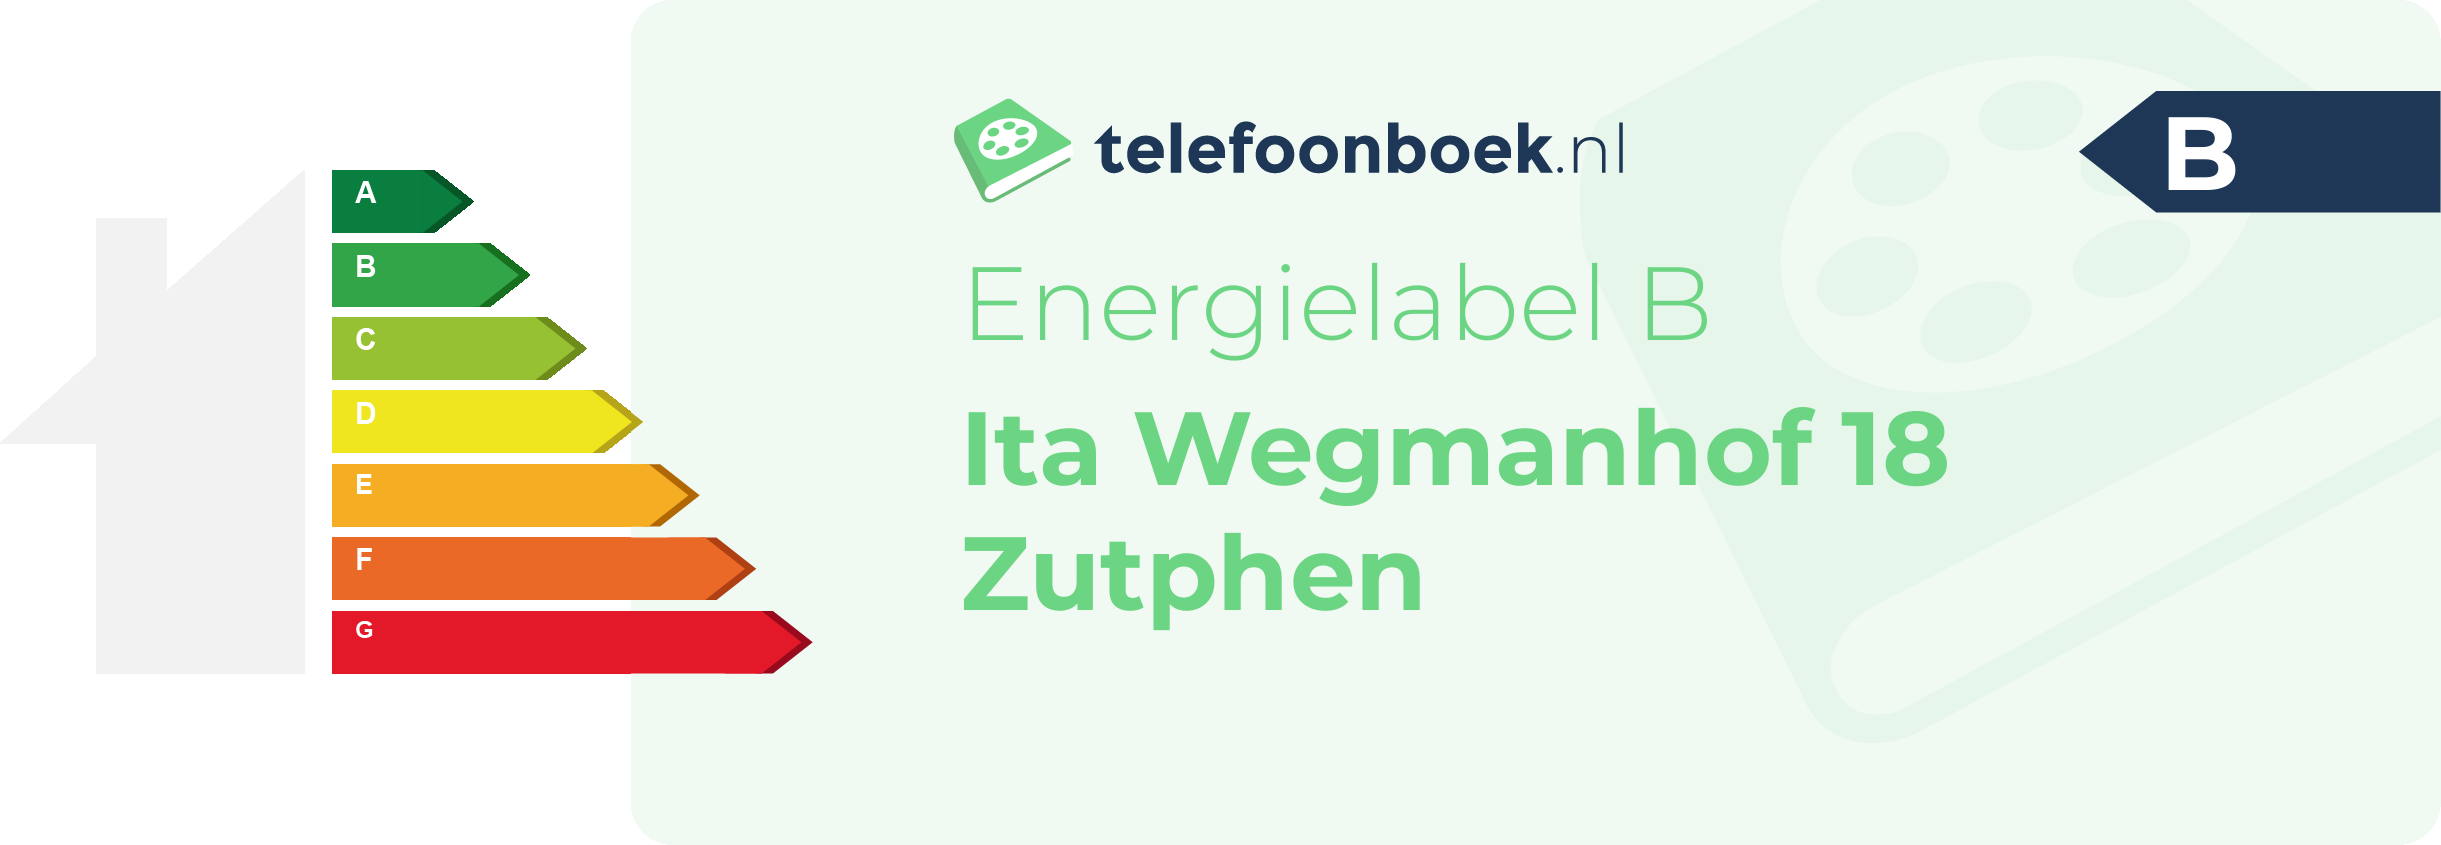 Energielabel Ita Wegmanhof 18 Zutphen